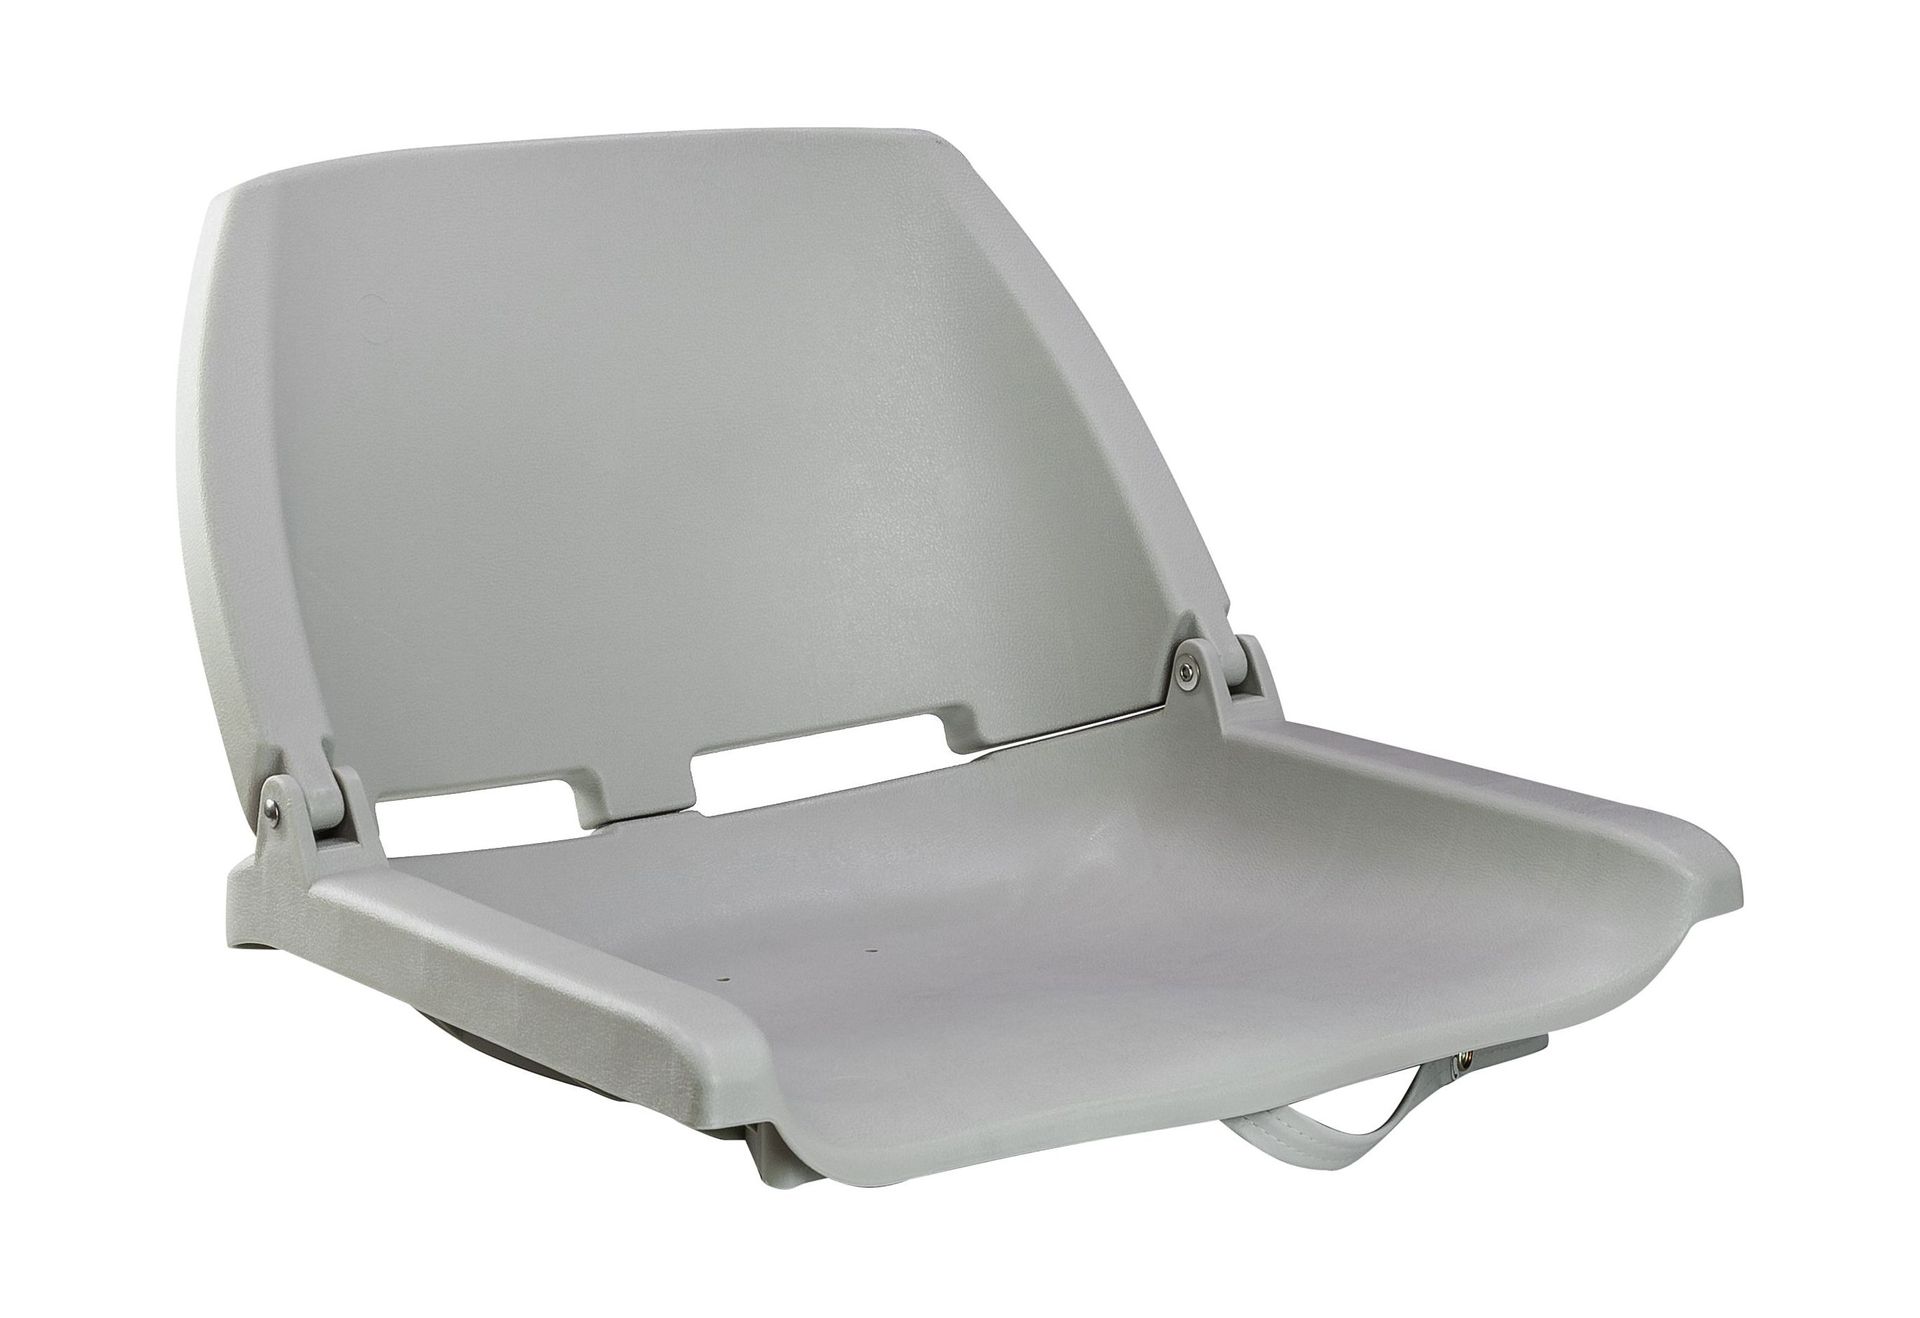 Кресло складное, пластик, цвет серый, Marine Rocket 75110G-MR кресло складное пластиковое черное 10100b mr